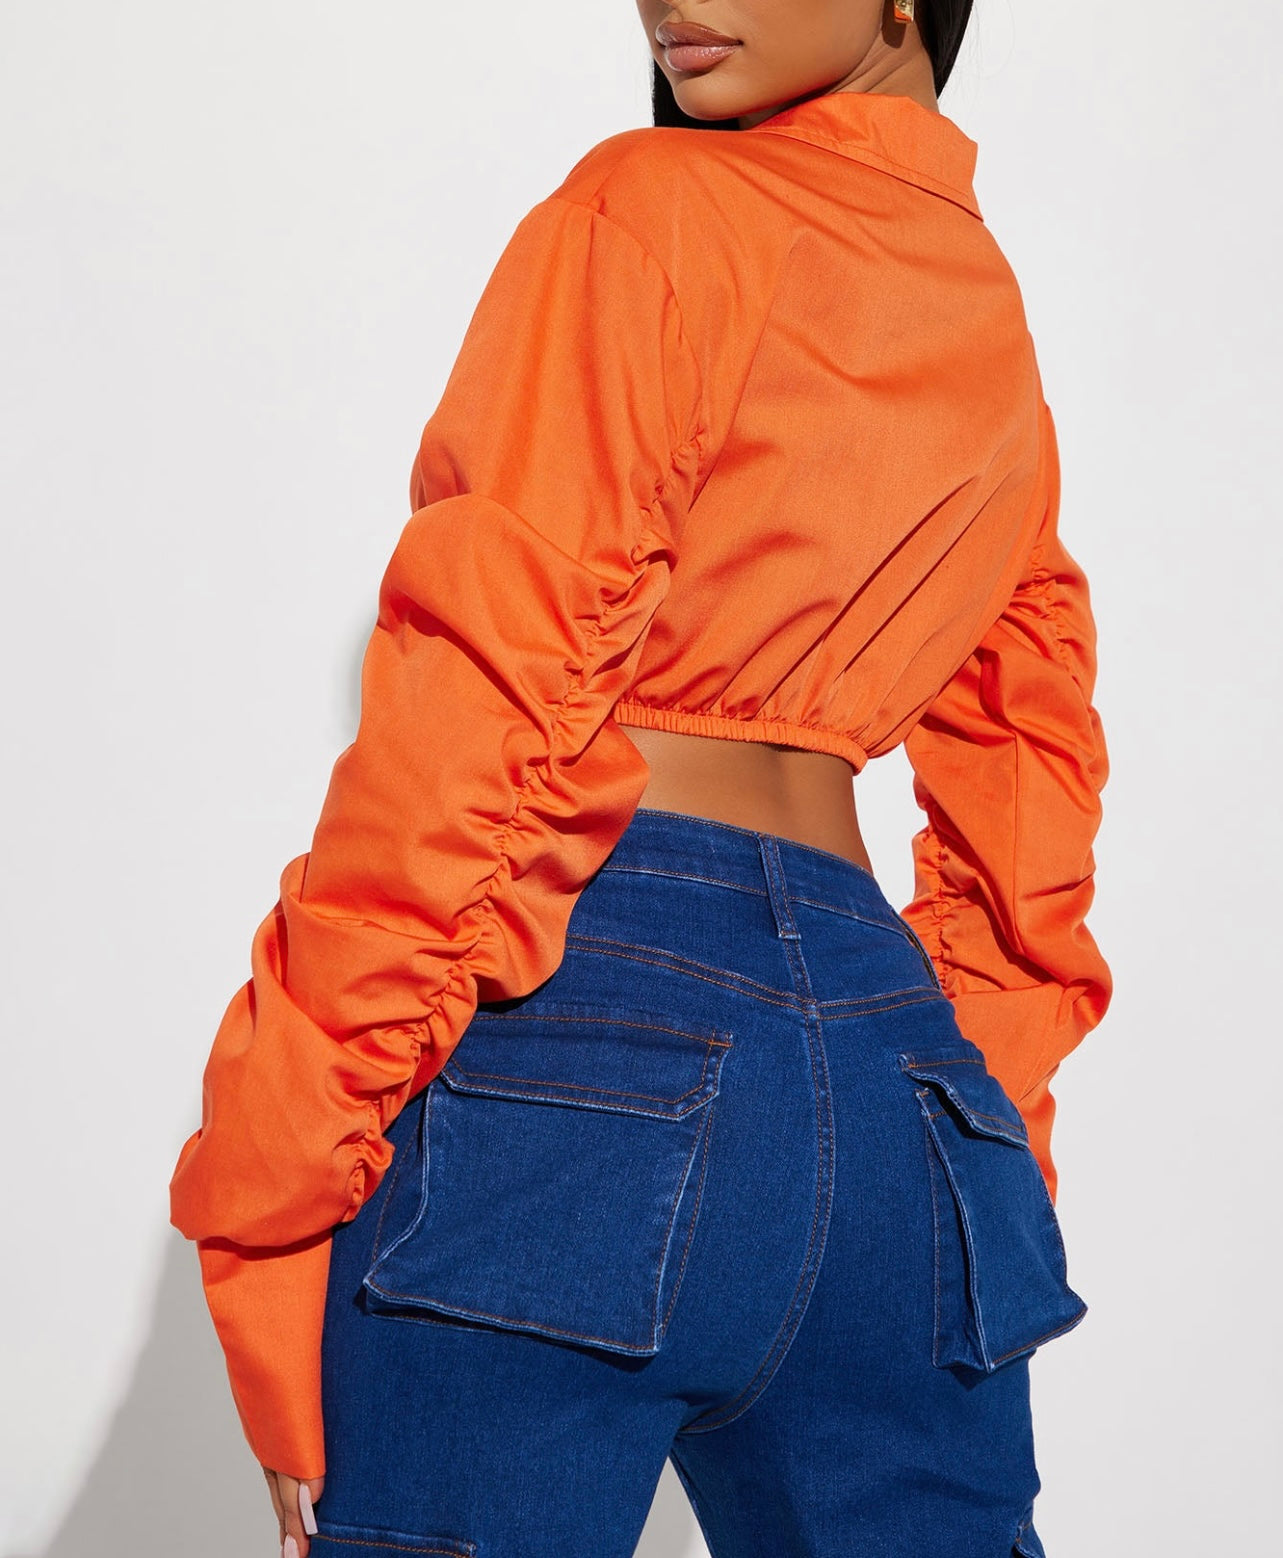 Orange Bae’ Crop top